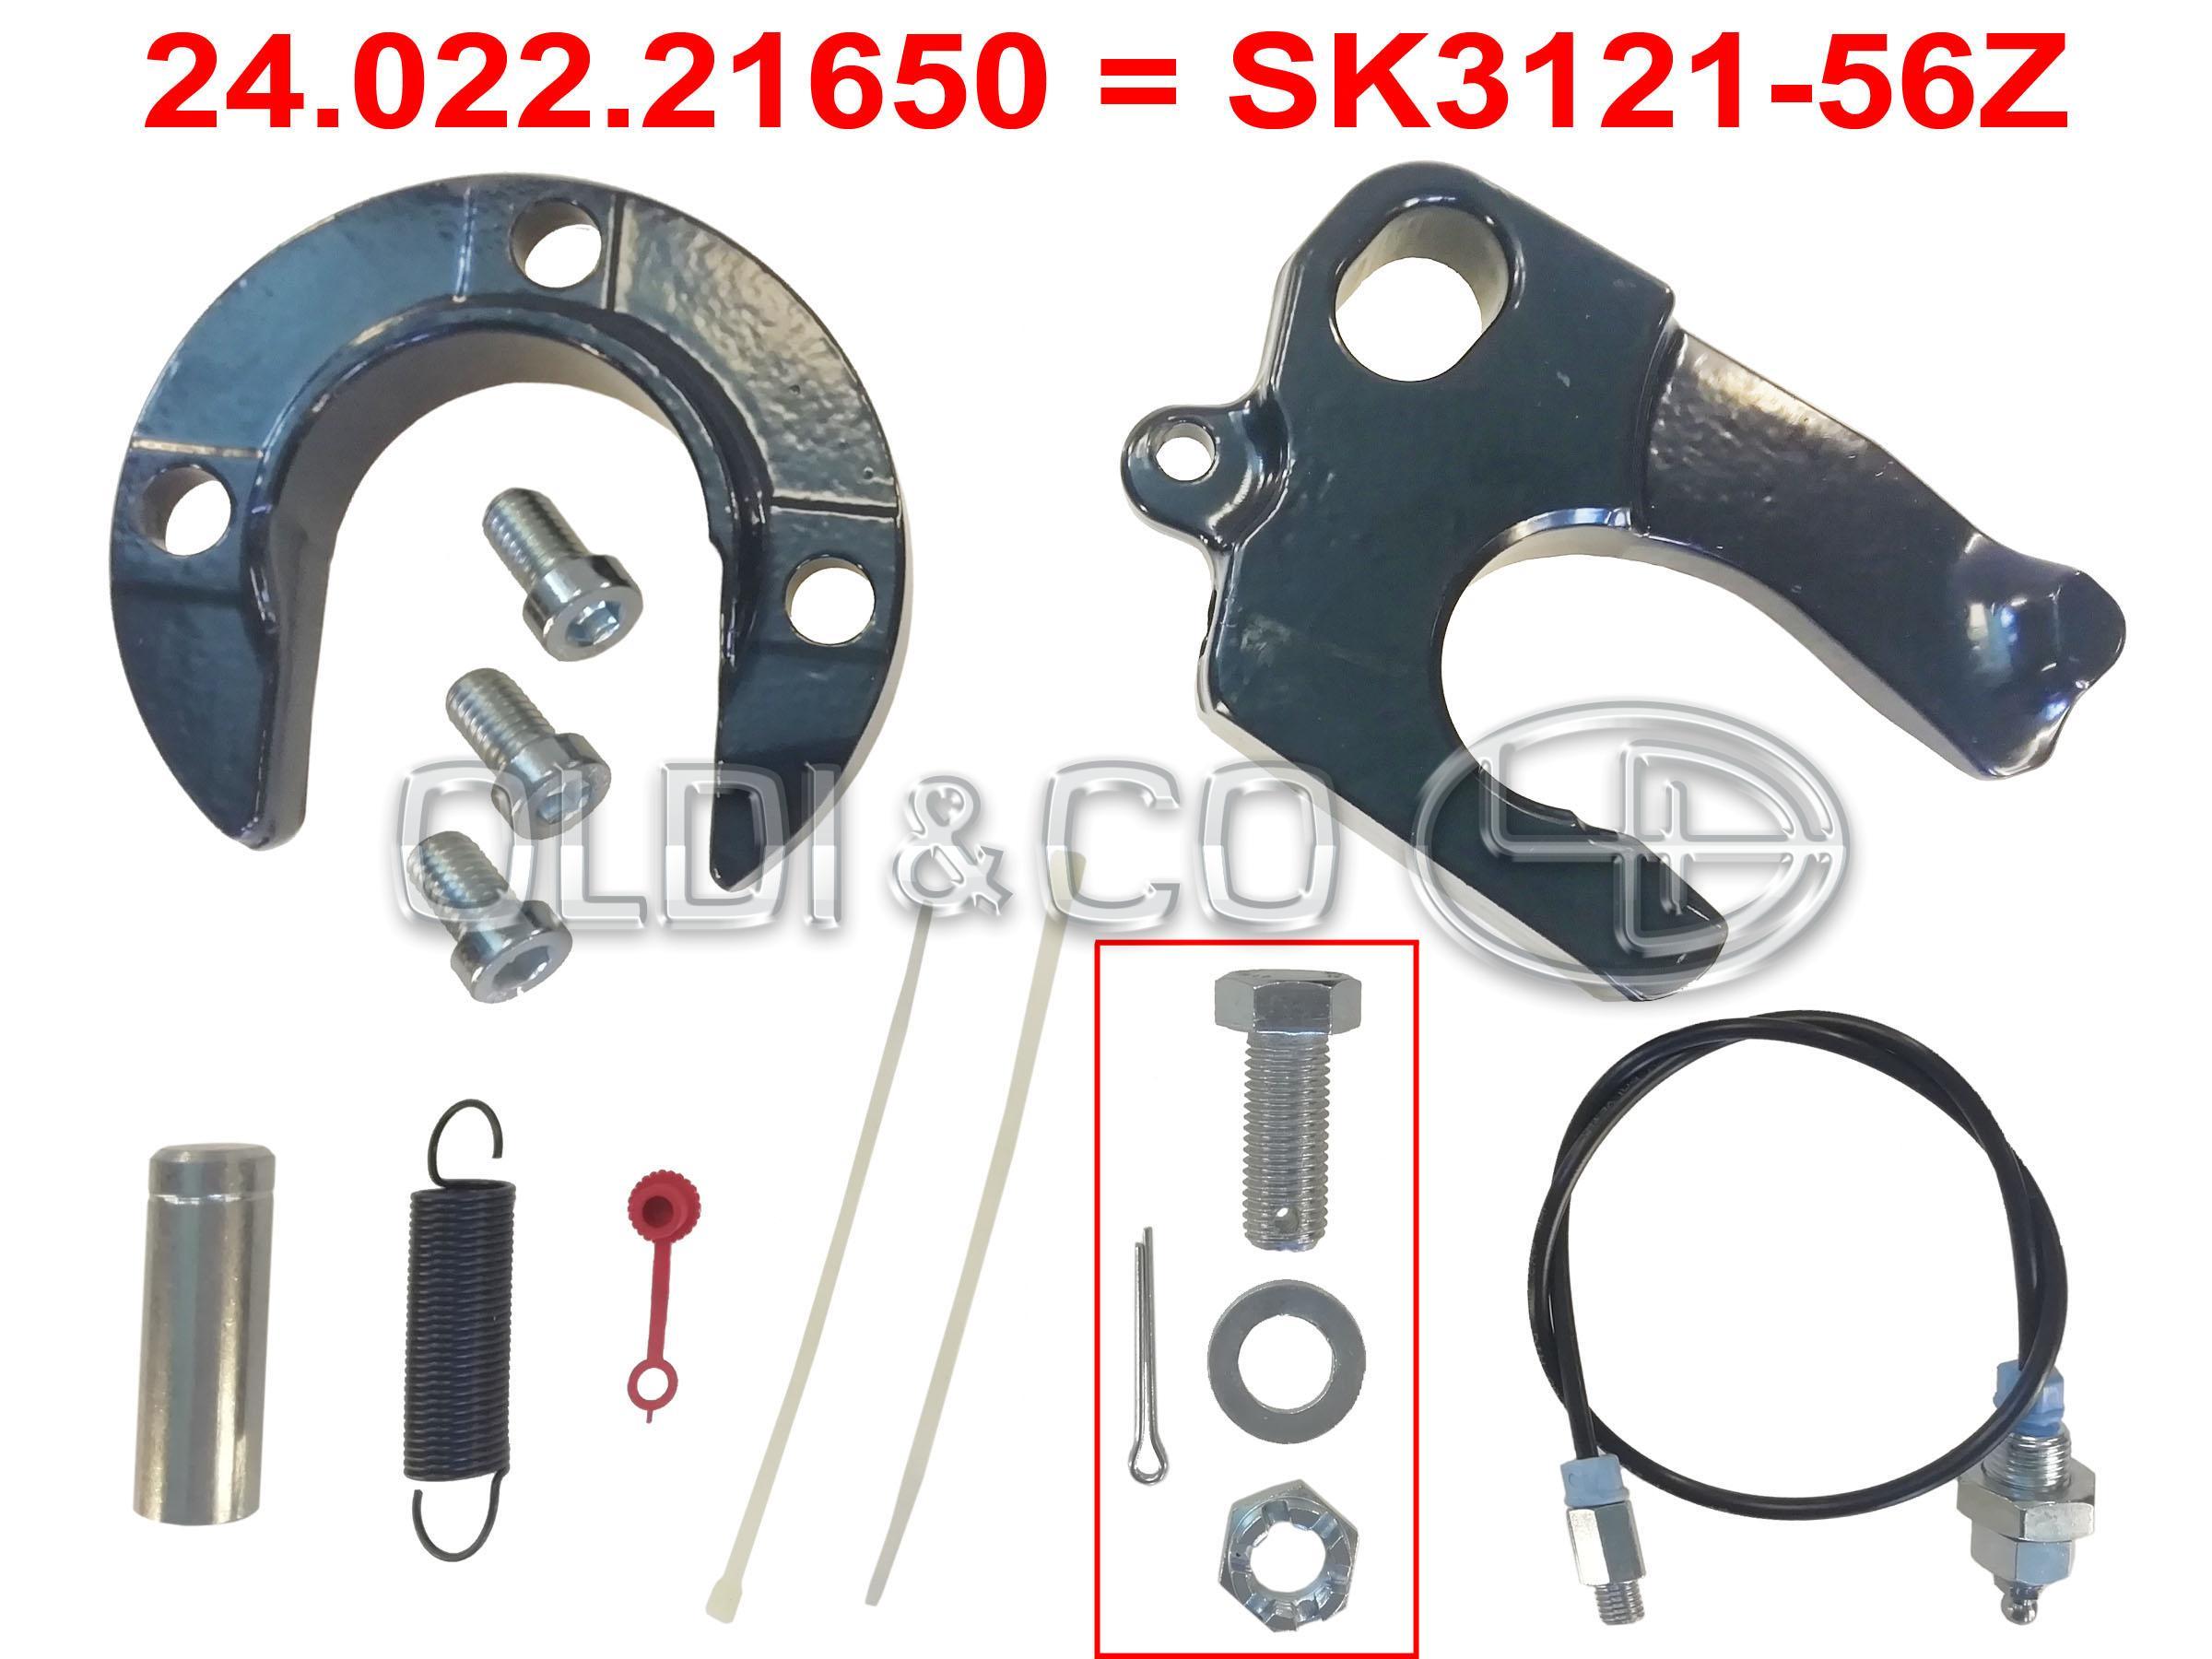 24.022.21650 Coupling devices → Repair kit